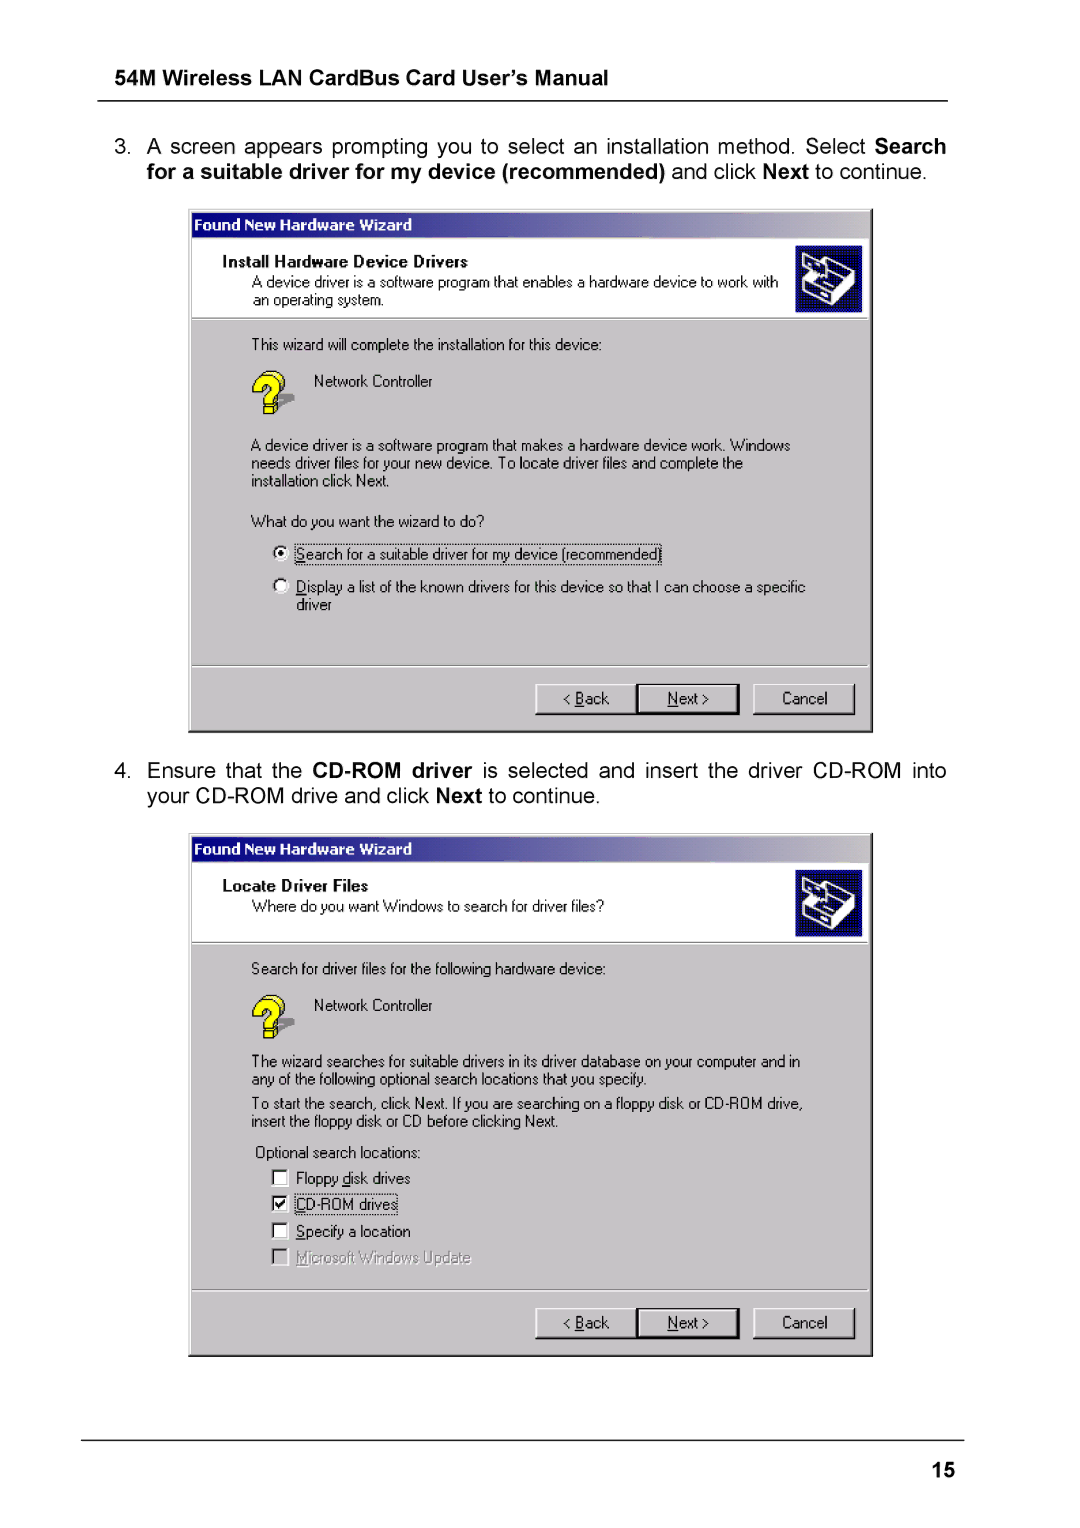 Boca Research user manual 54M Wireless LAN CardBus Card User’s Manual 